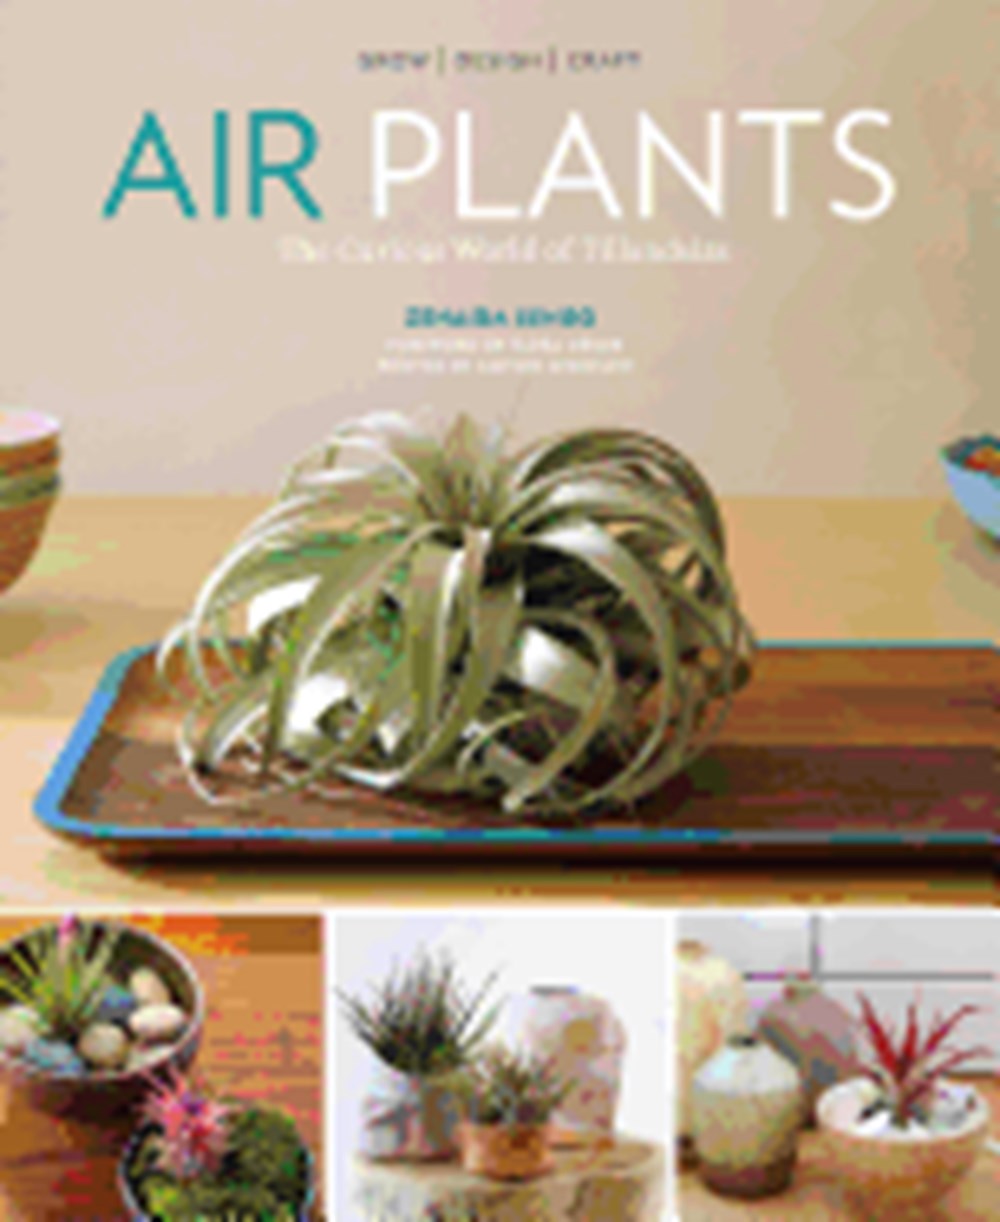 Air Plants: The Curious World of Tillandsias